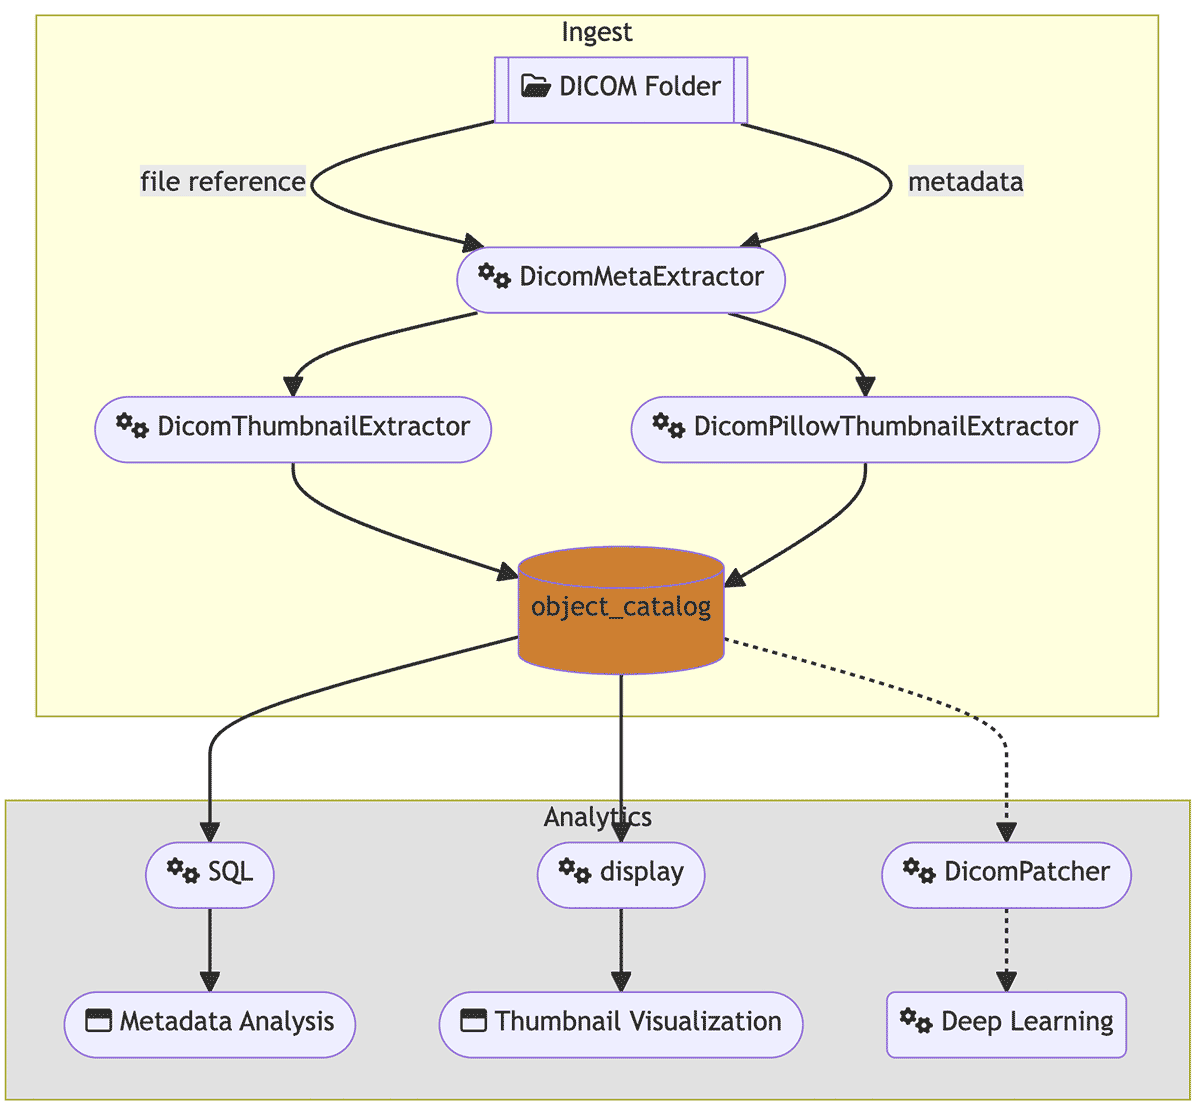 Metadata Analysis of DICOM attributes using SQL